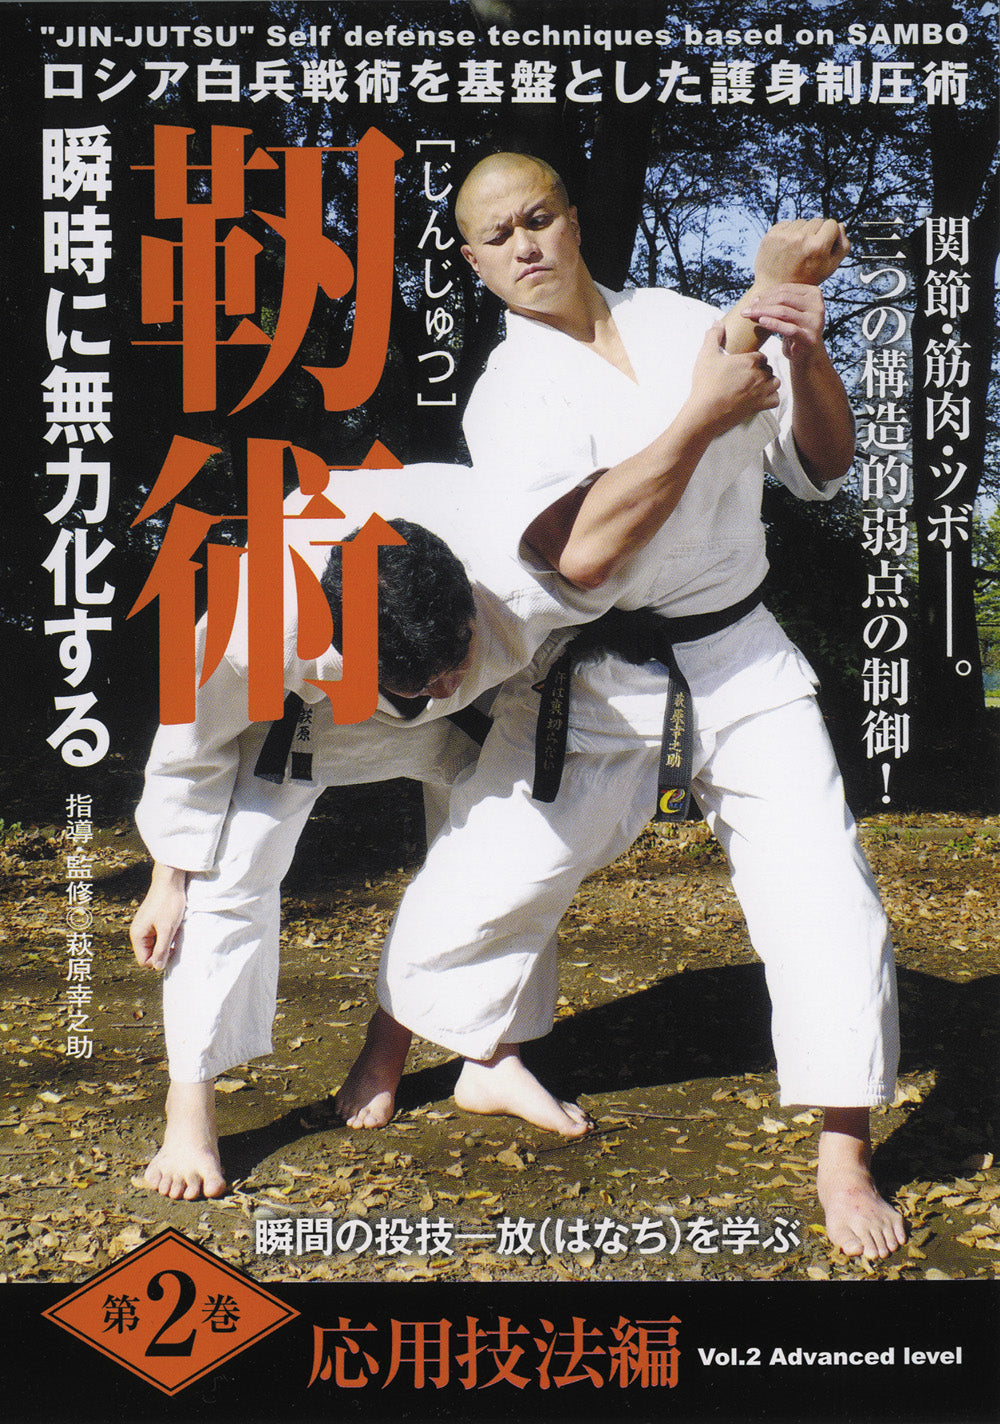 Junjutsu: Self Defense Based on Sambo Vol 2 DVD by Konosuke Hagiwara